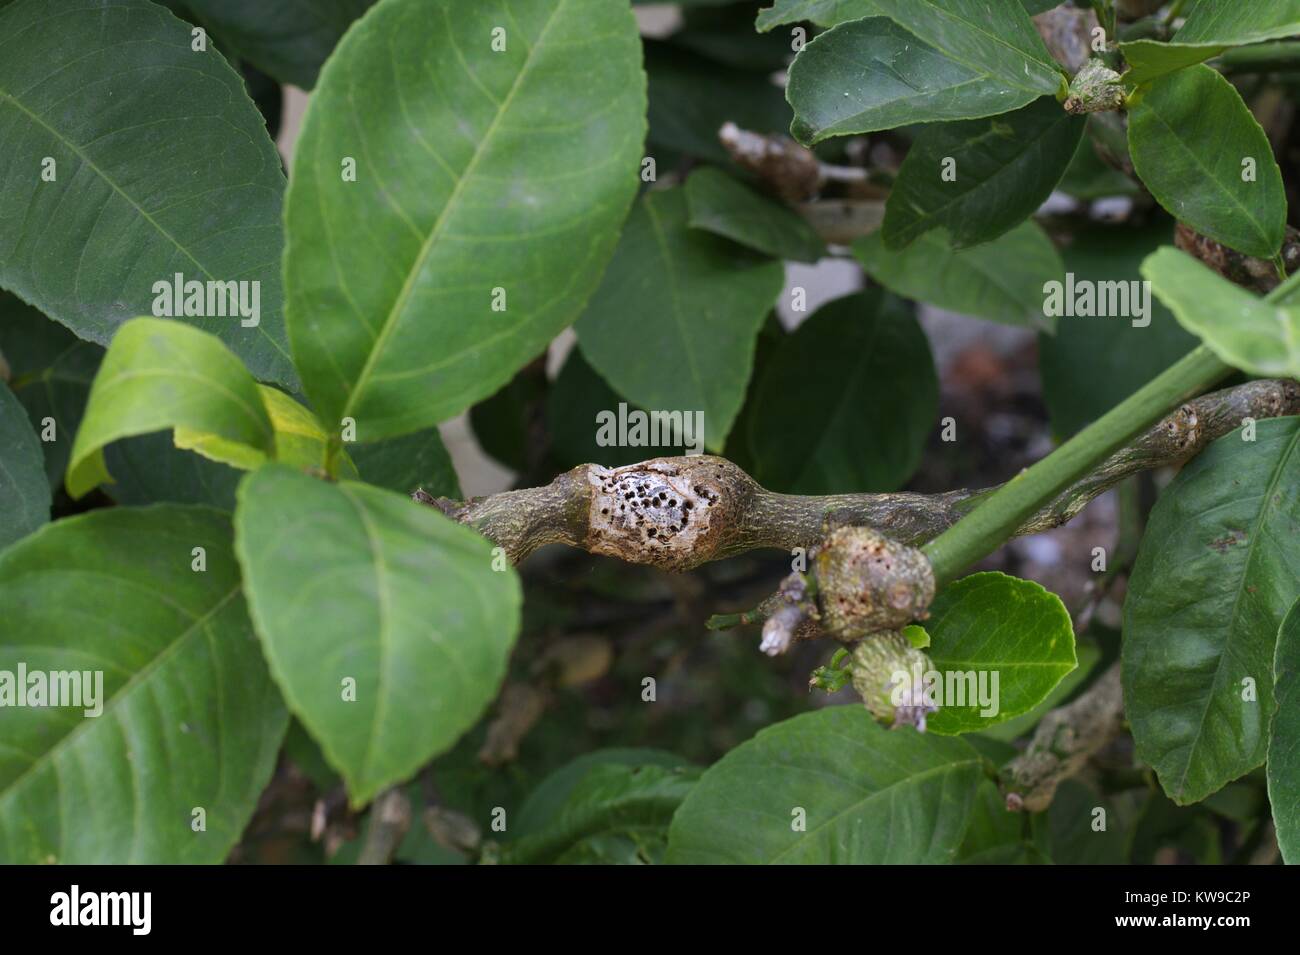 Severe gall wasp damage on suburban lemon tree. Stock Photo